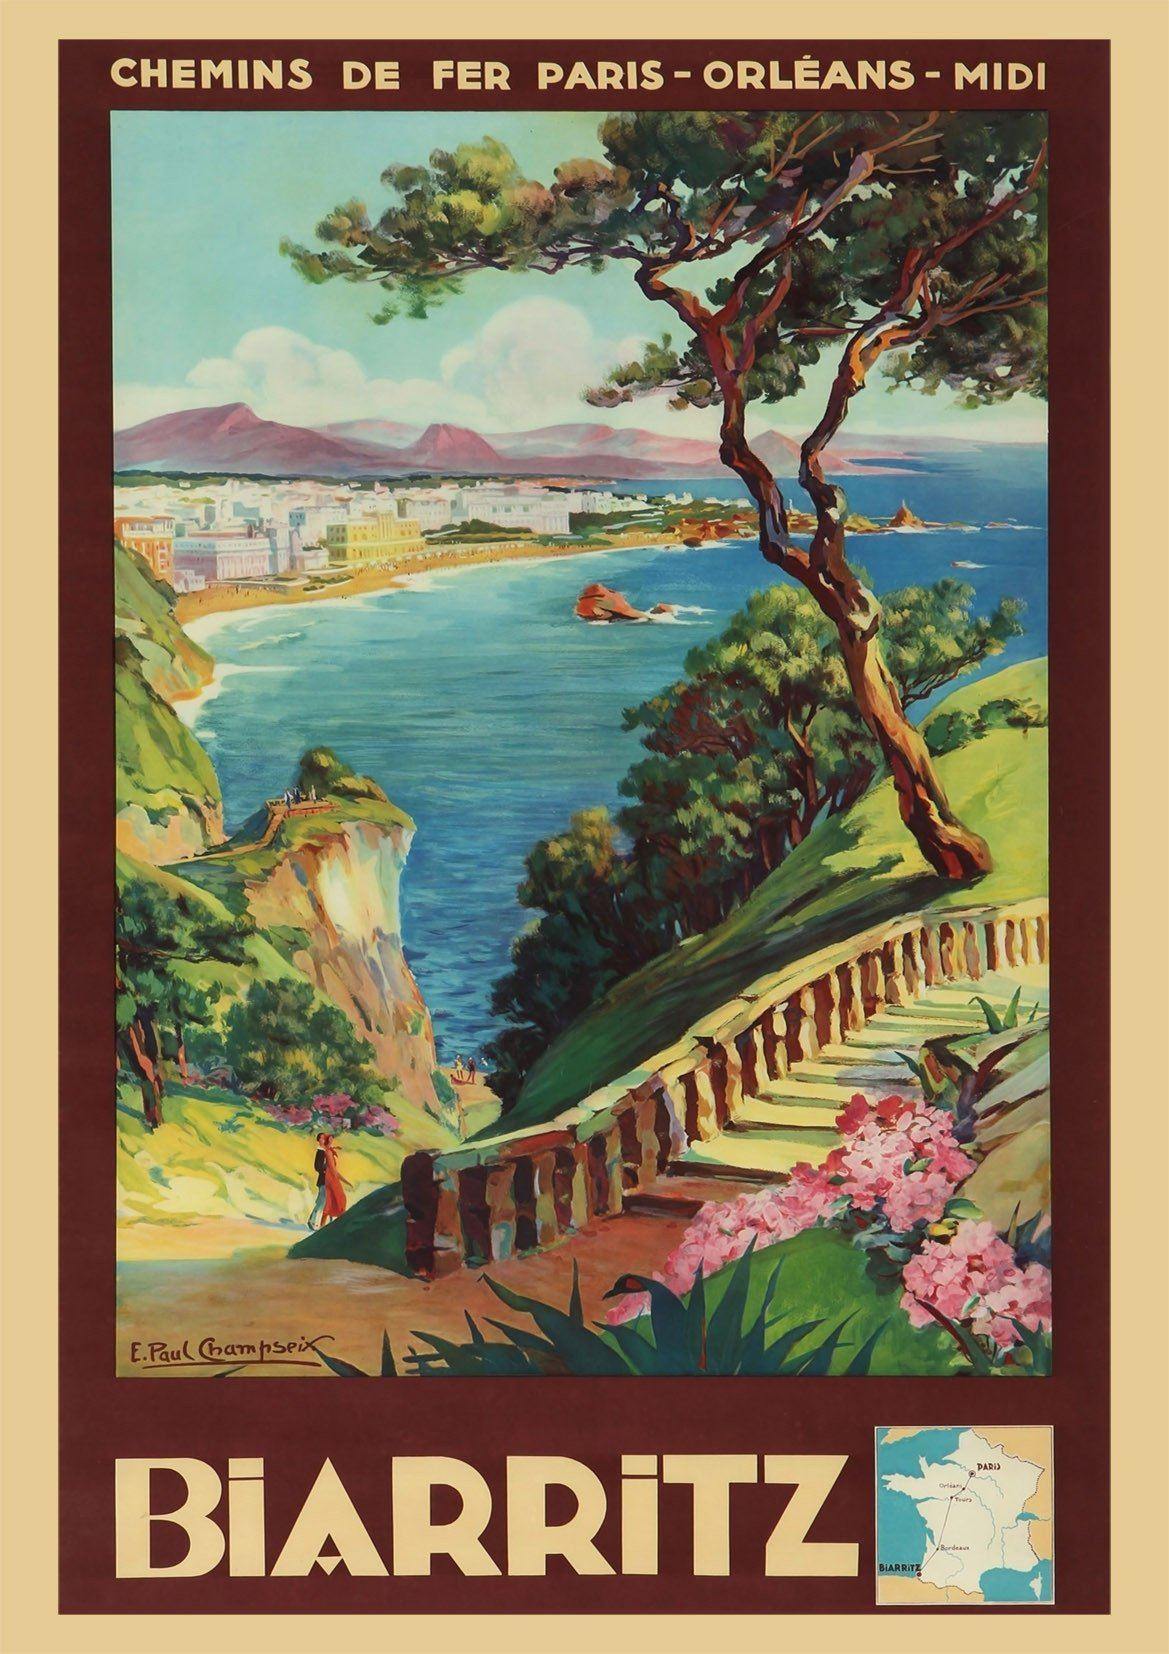 BIARRITZ POSTER: Vintage French Travel Print - Pimlico Prints